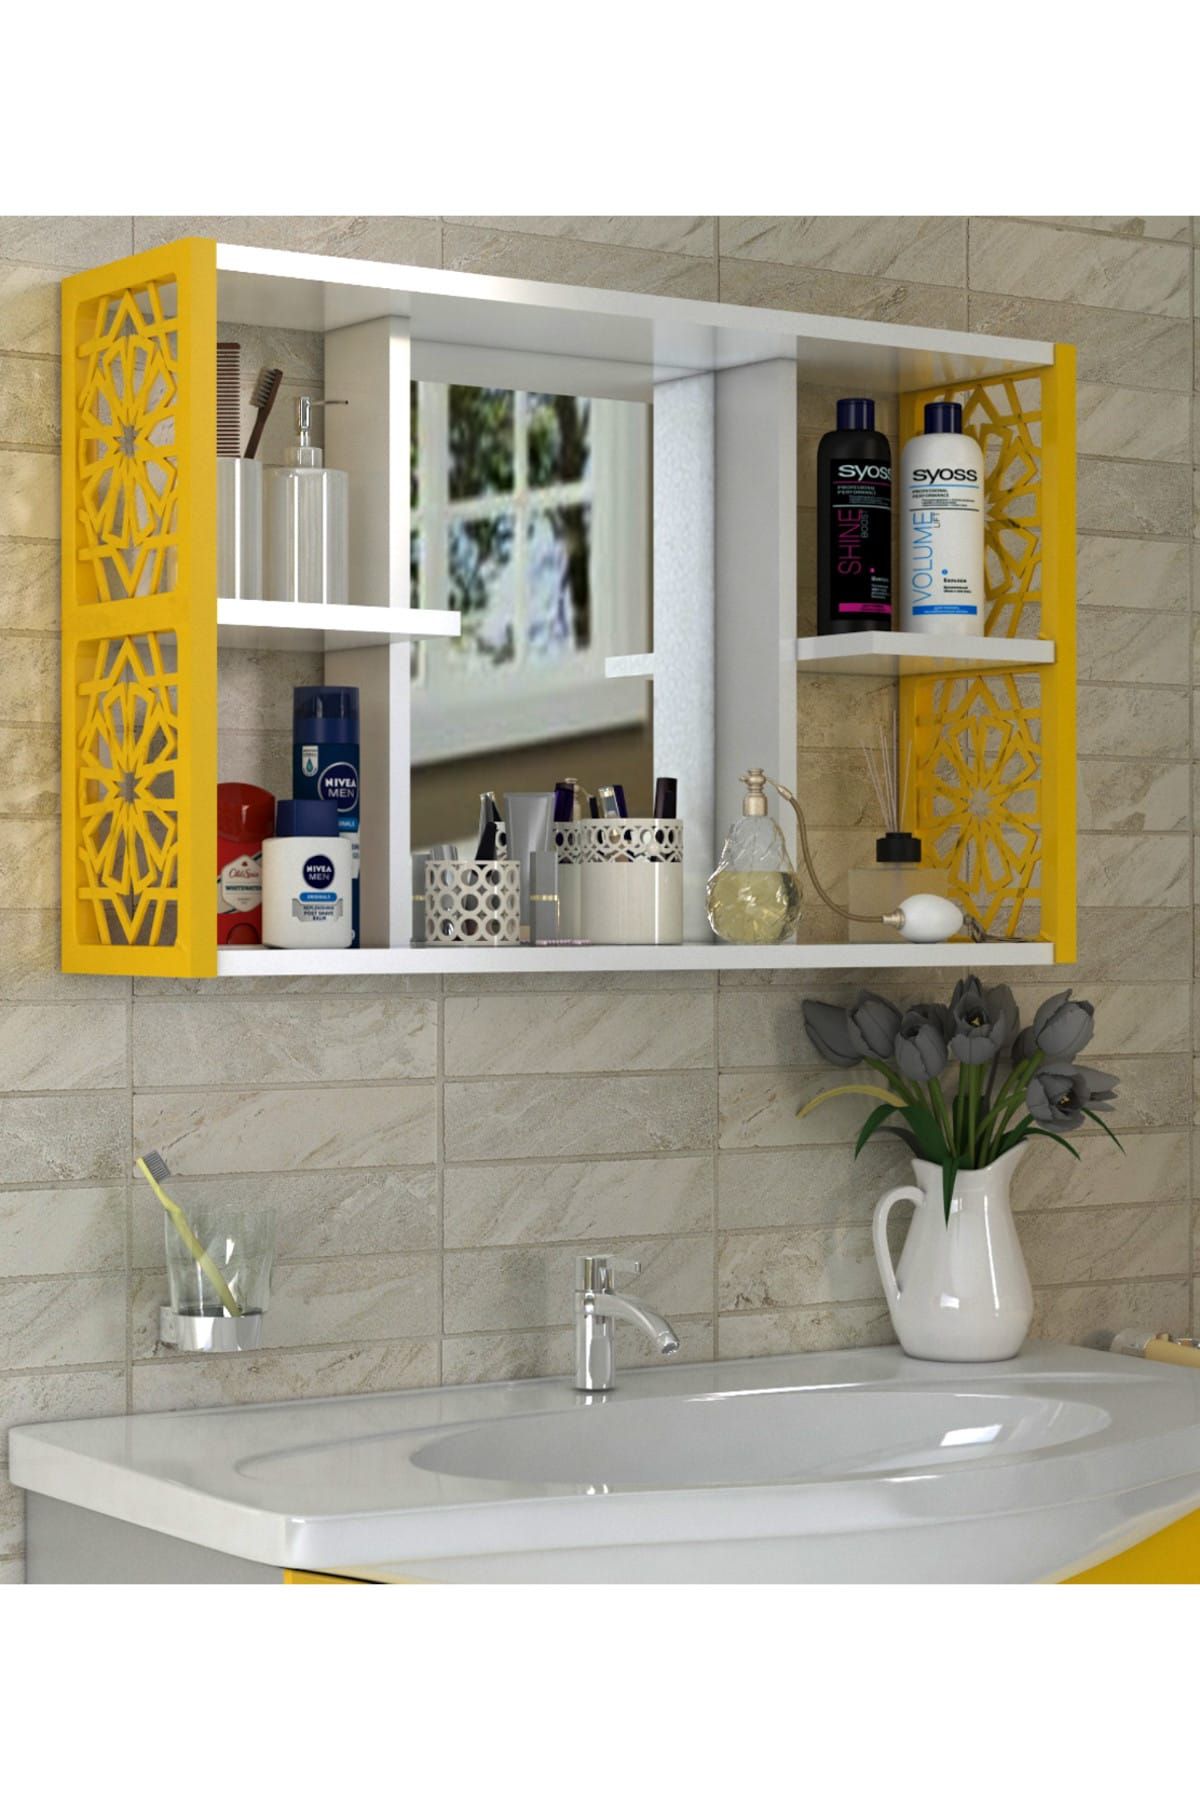 Remaks Aynalı Banyo Dolabı sarı